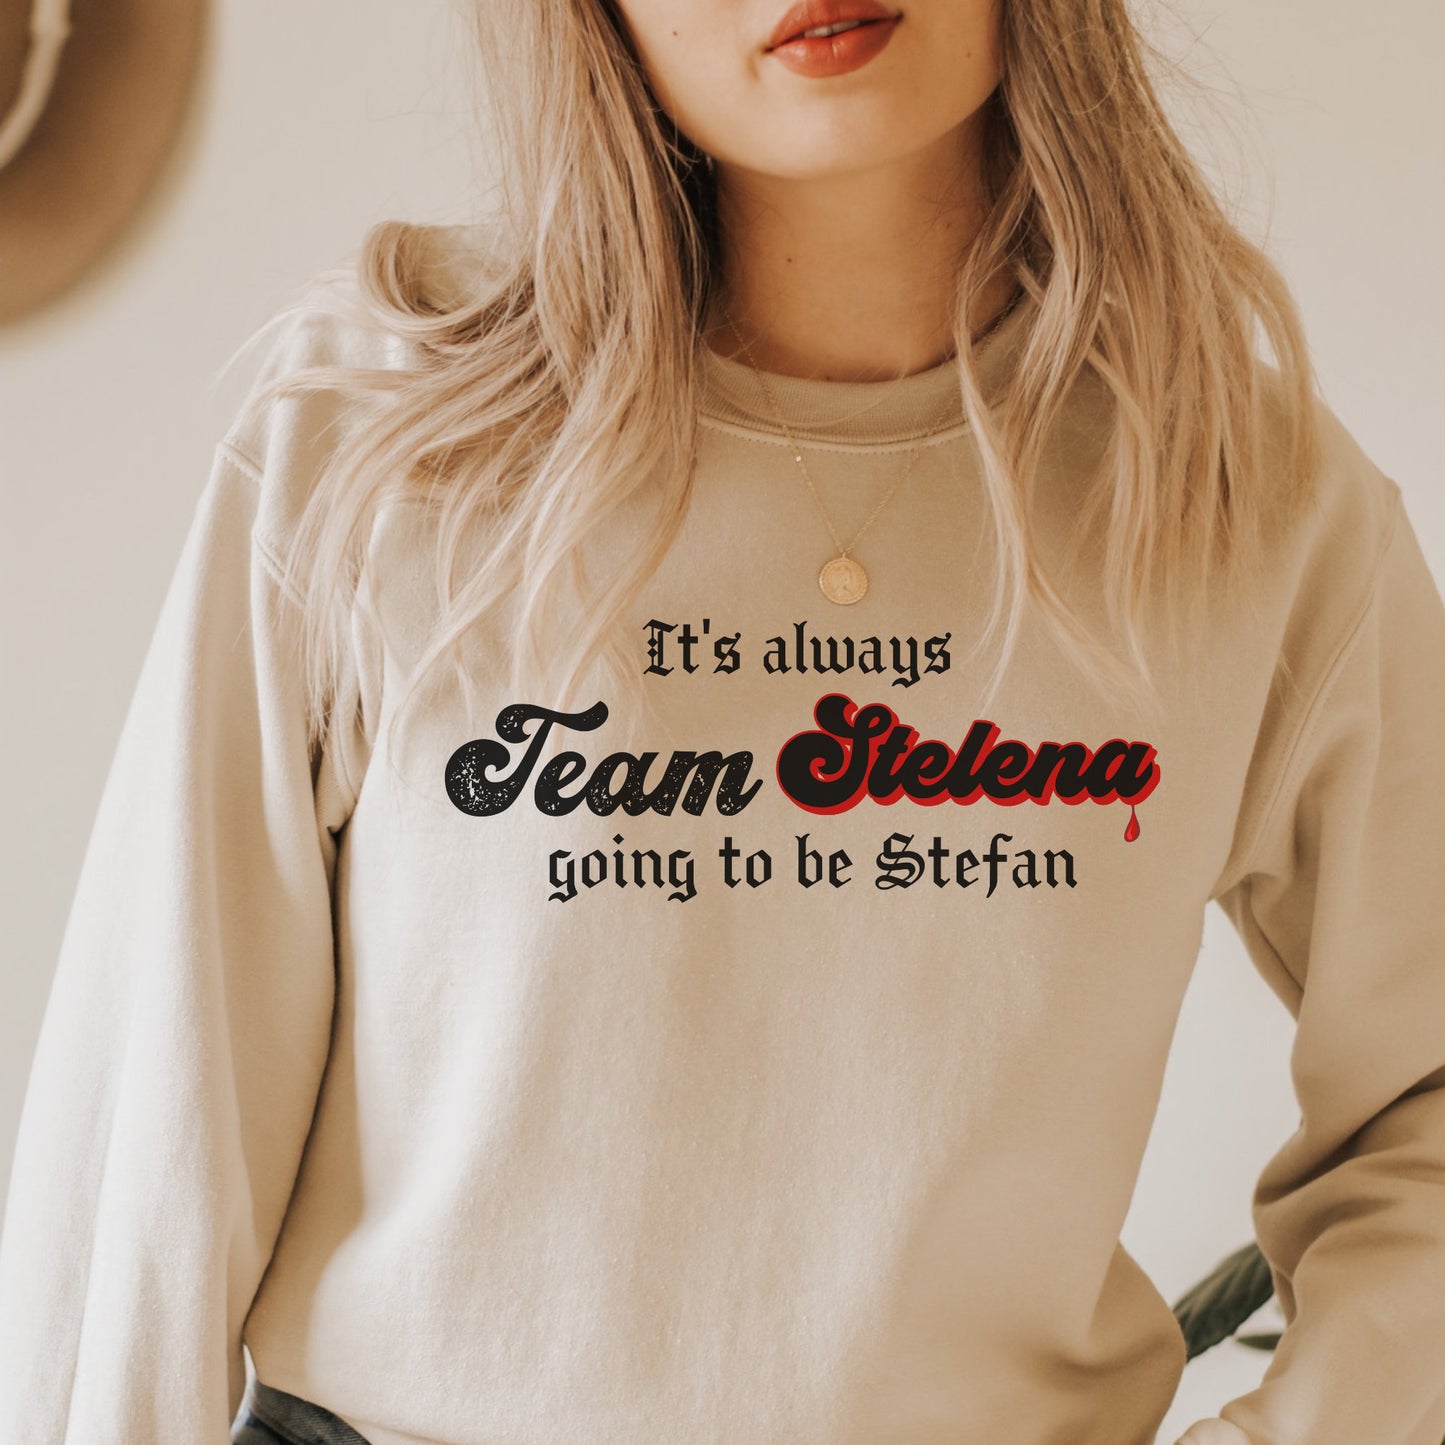 Team Stelena Sweatshirt, TVD sweatshirt, Tvd merch, TVD apparel, Stefan Salvatore, The Vampire diaries, TVD fan gift